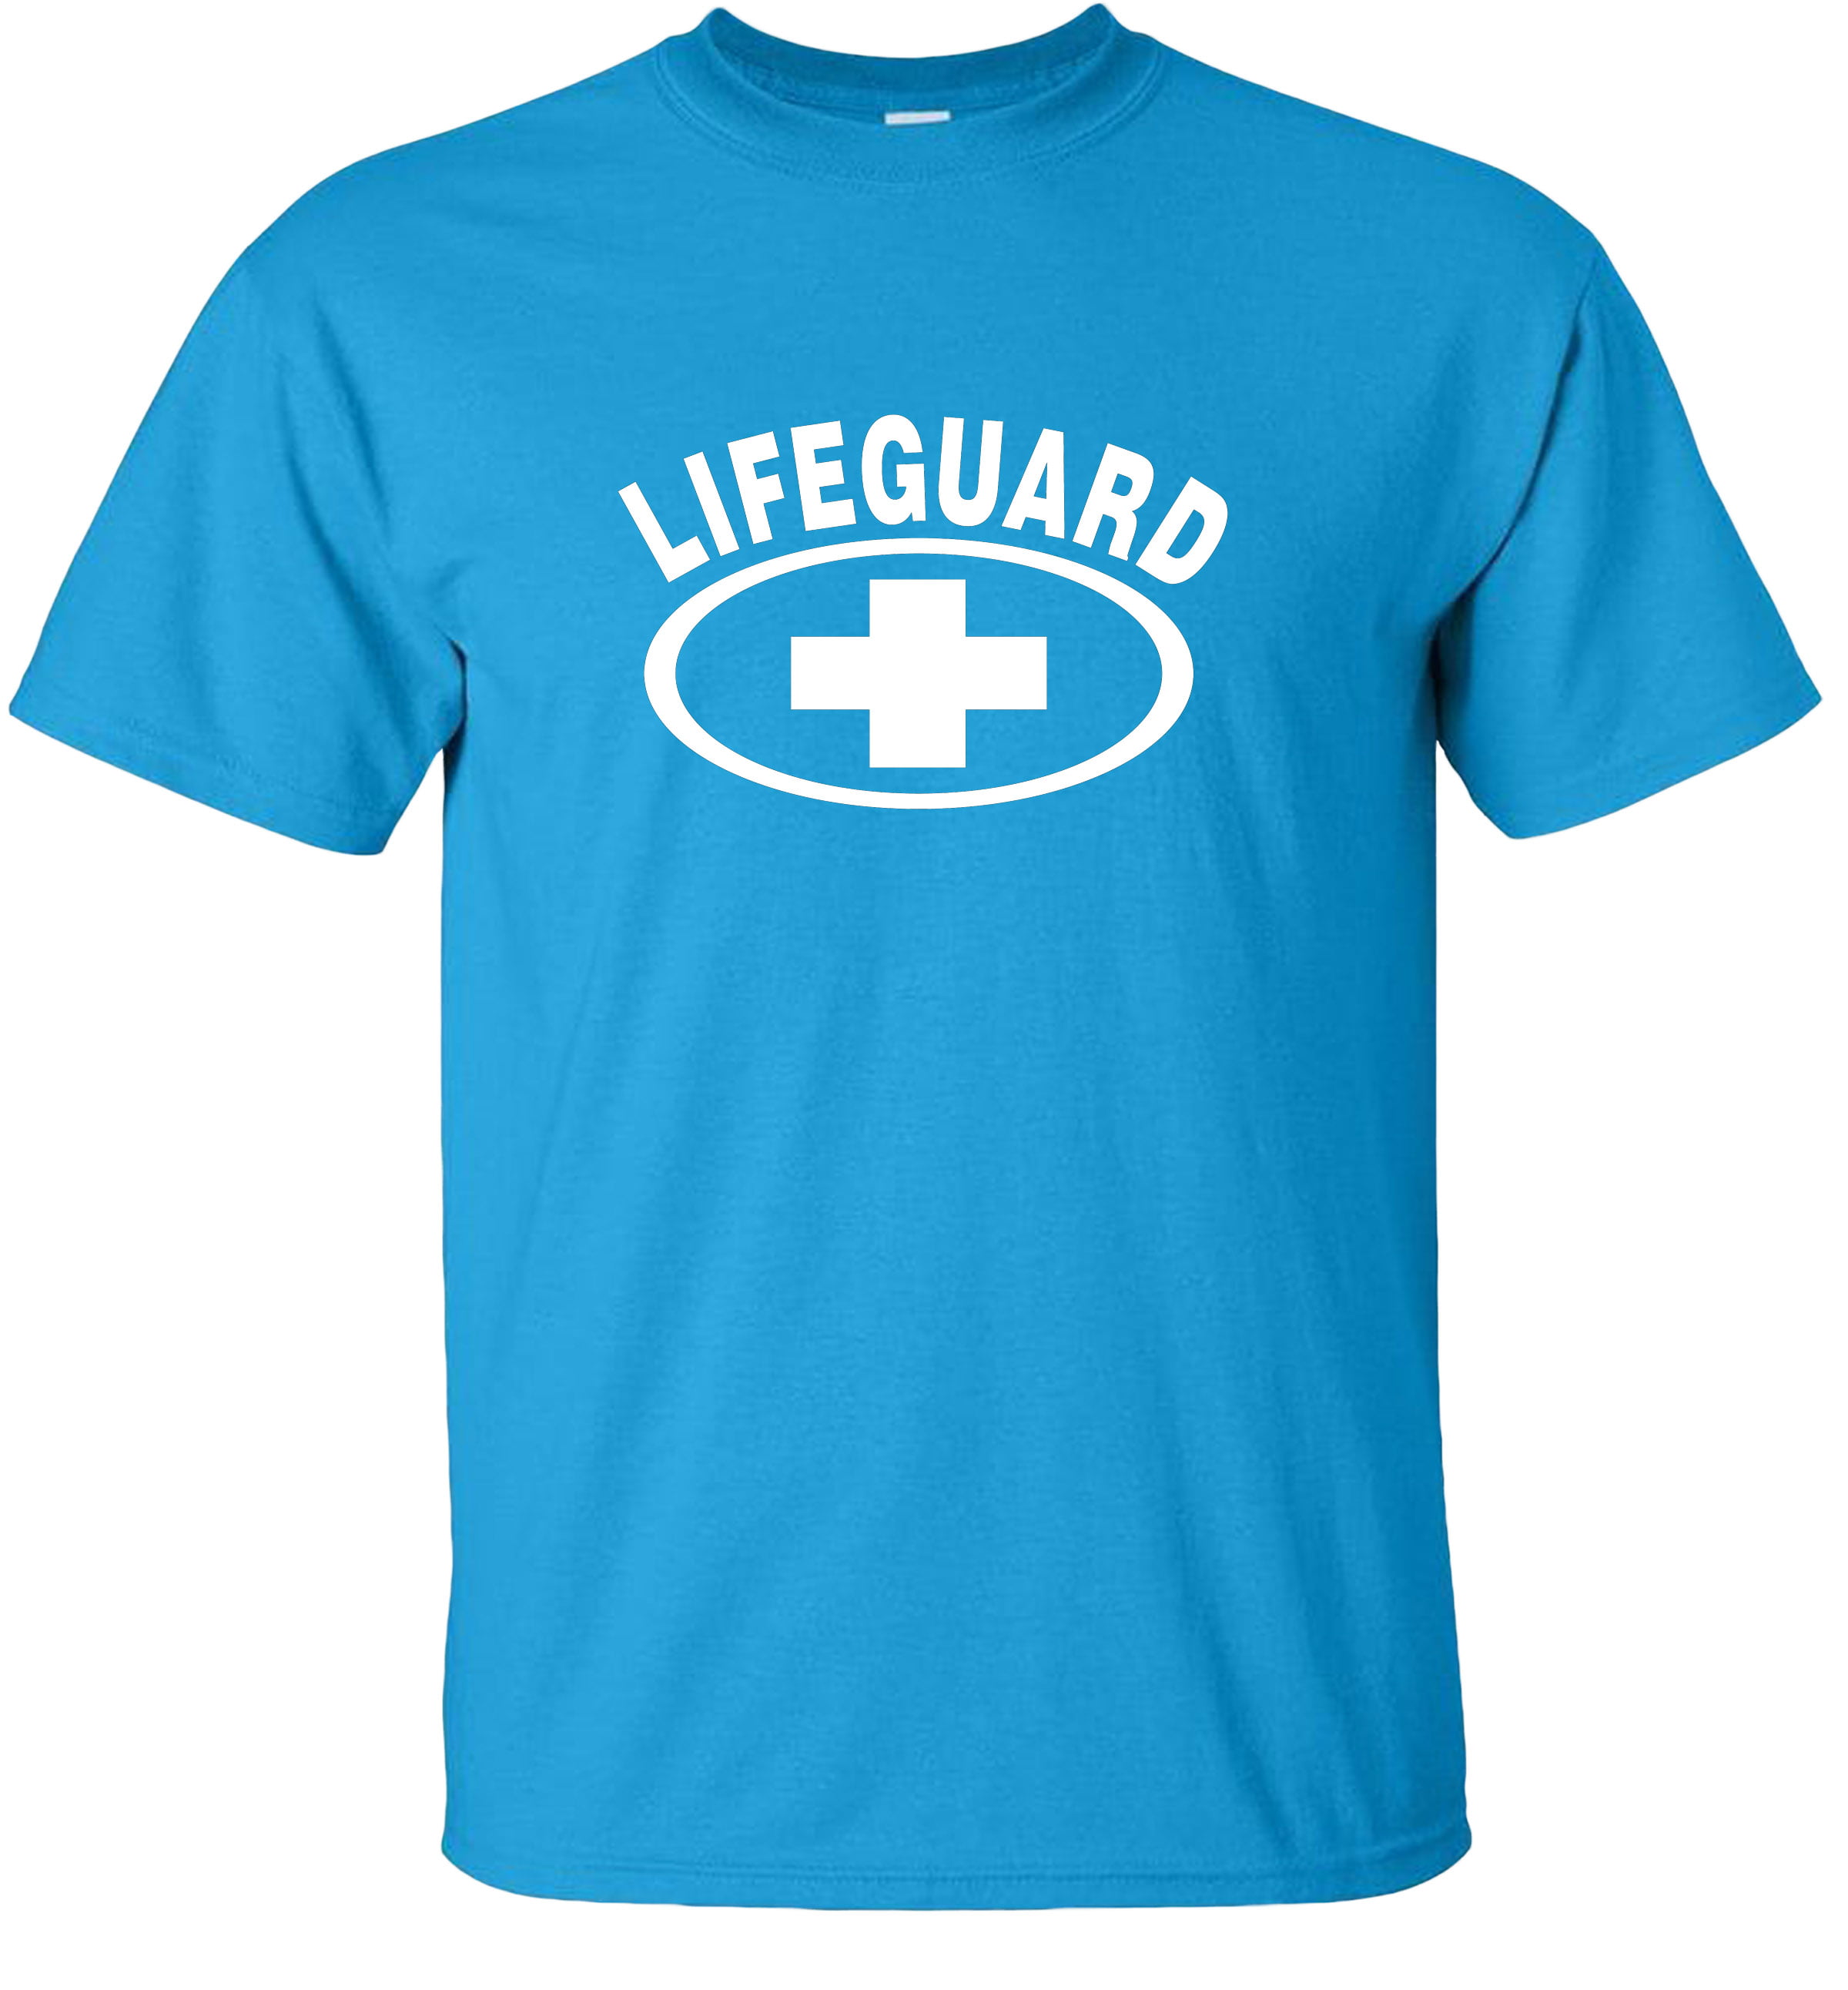 Fair Game Lifeguard T-Shirt, lifeguarding cross Graphic Tee-Sapphire ...